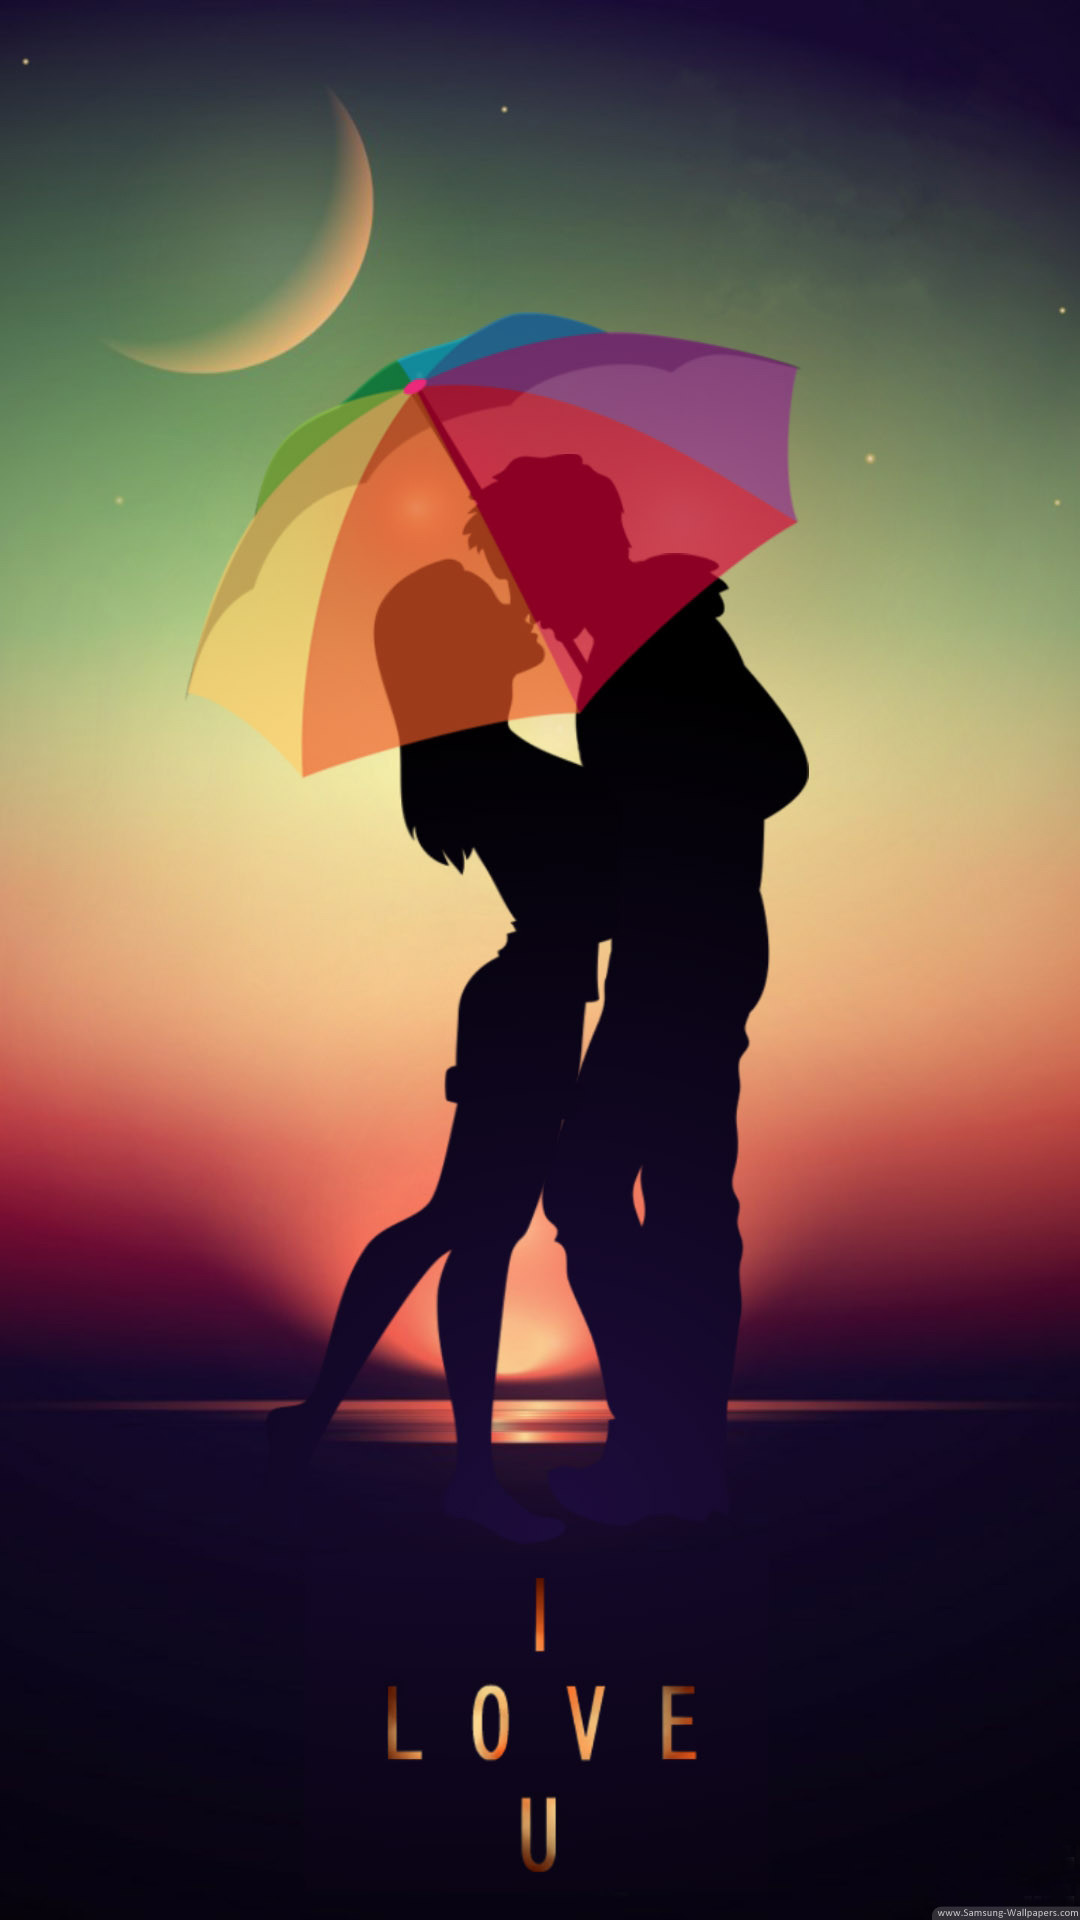 lock screen wallpaper hd,umbrella,romance,poster,sky,love